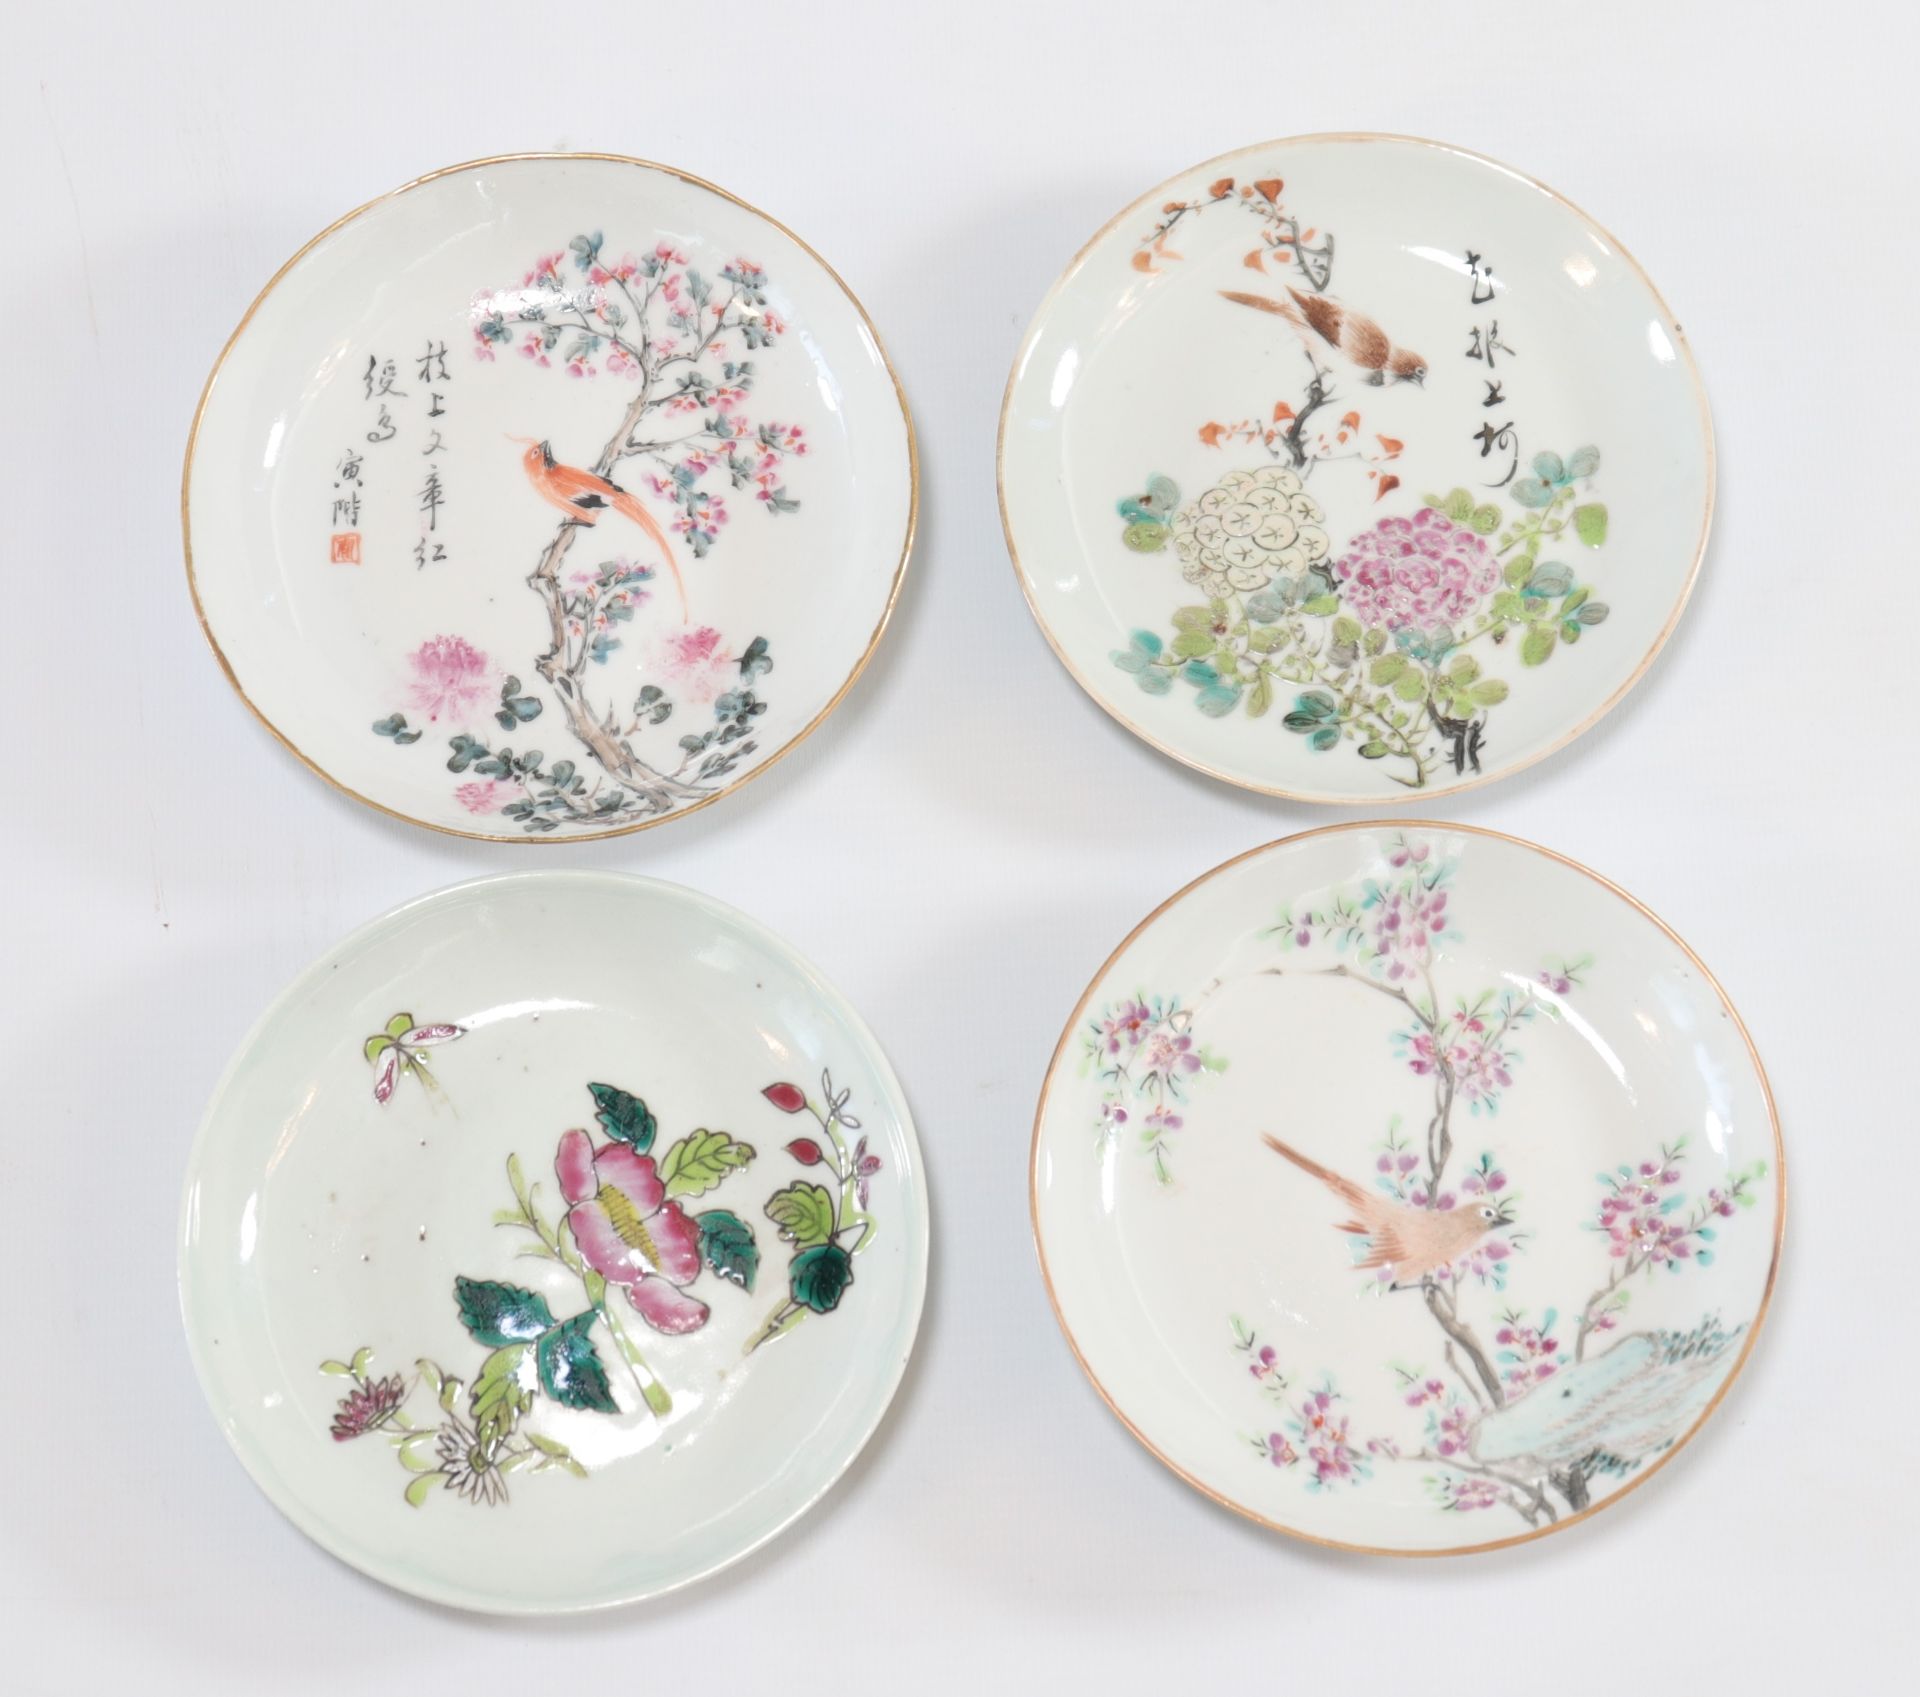 Set of 4 Chinese porcelain plates